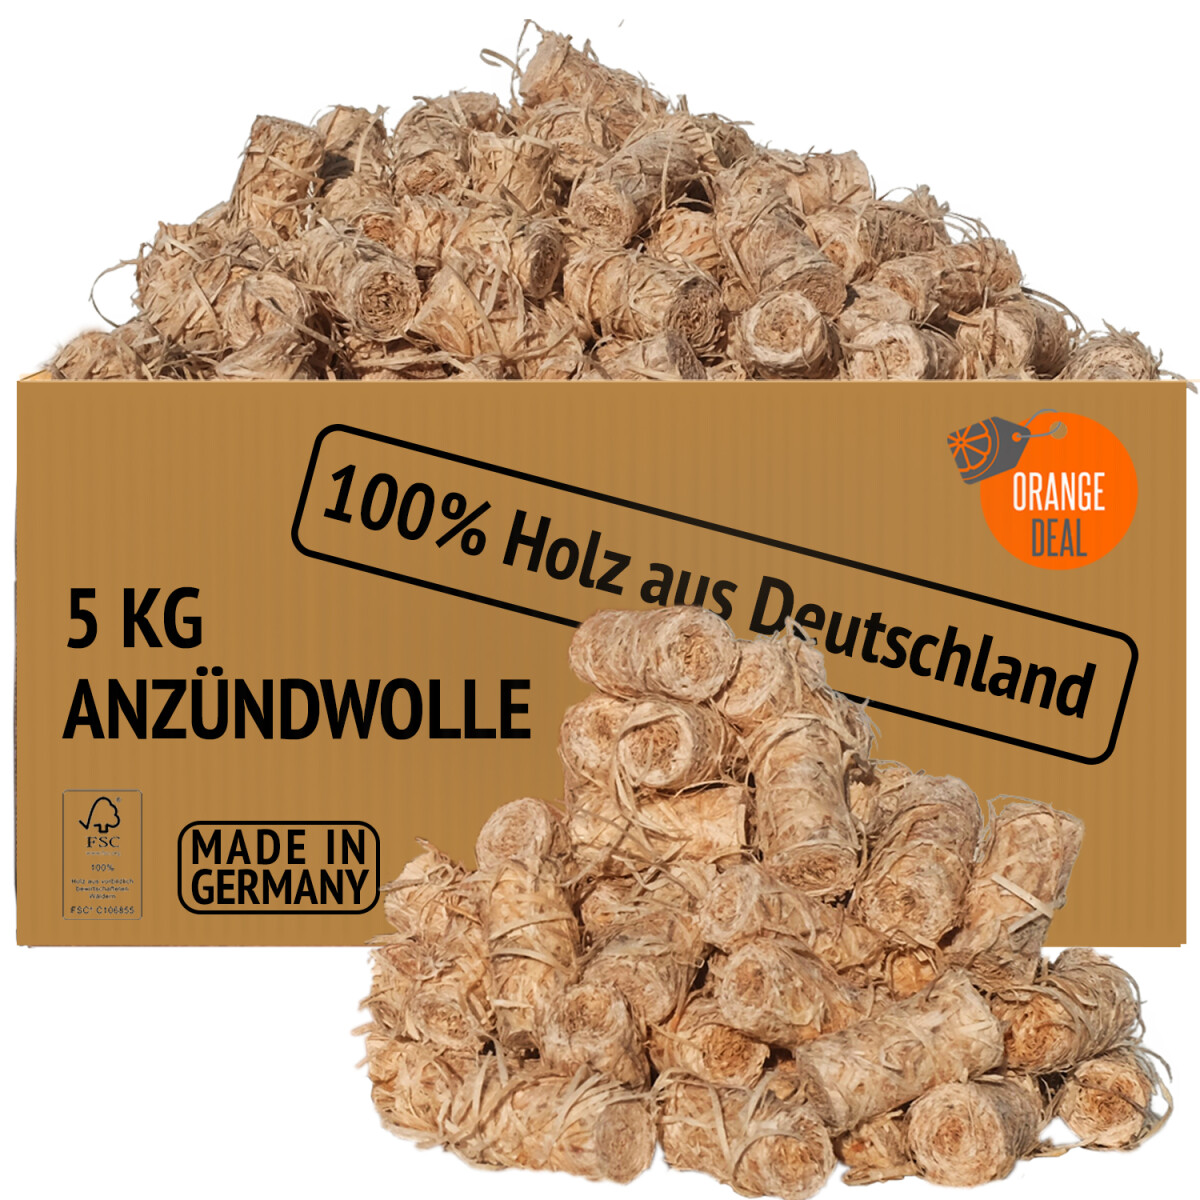 2,07€/1kg Anzündwürfel Kaminanzünder OKÖ Grillanzünder HolzWachs Anzünder 28kg 